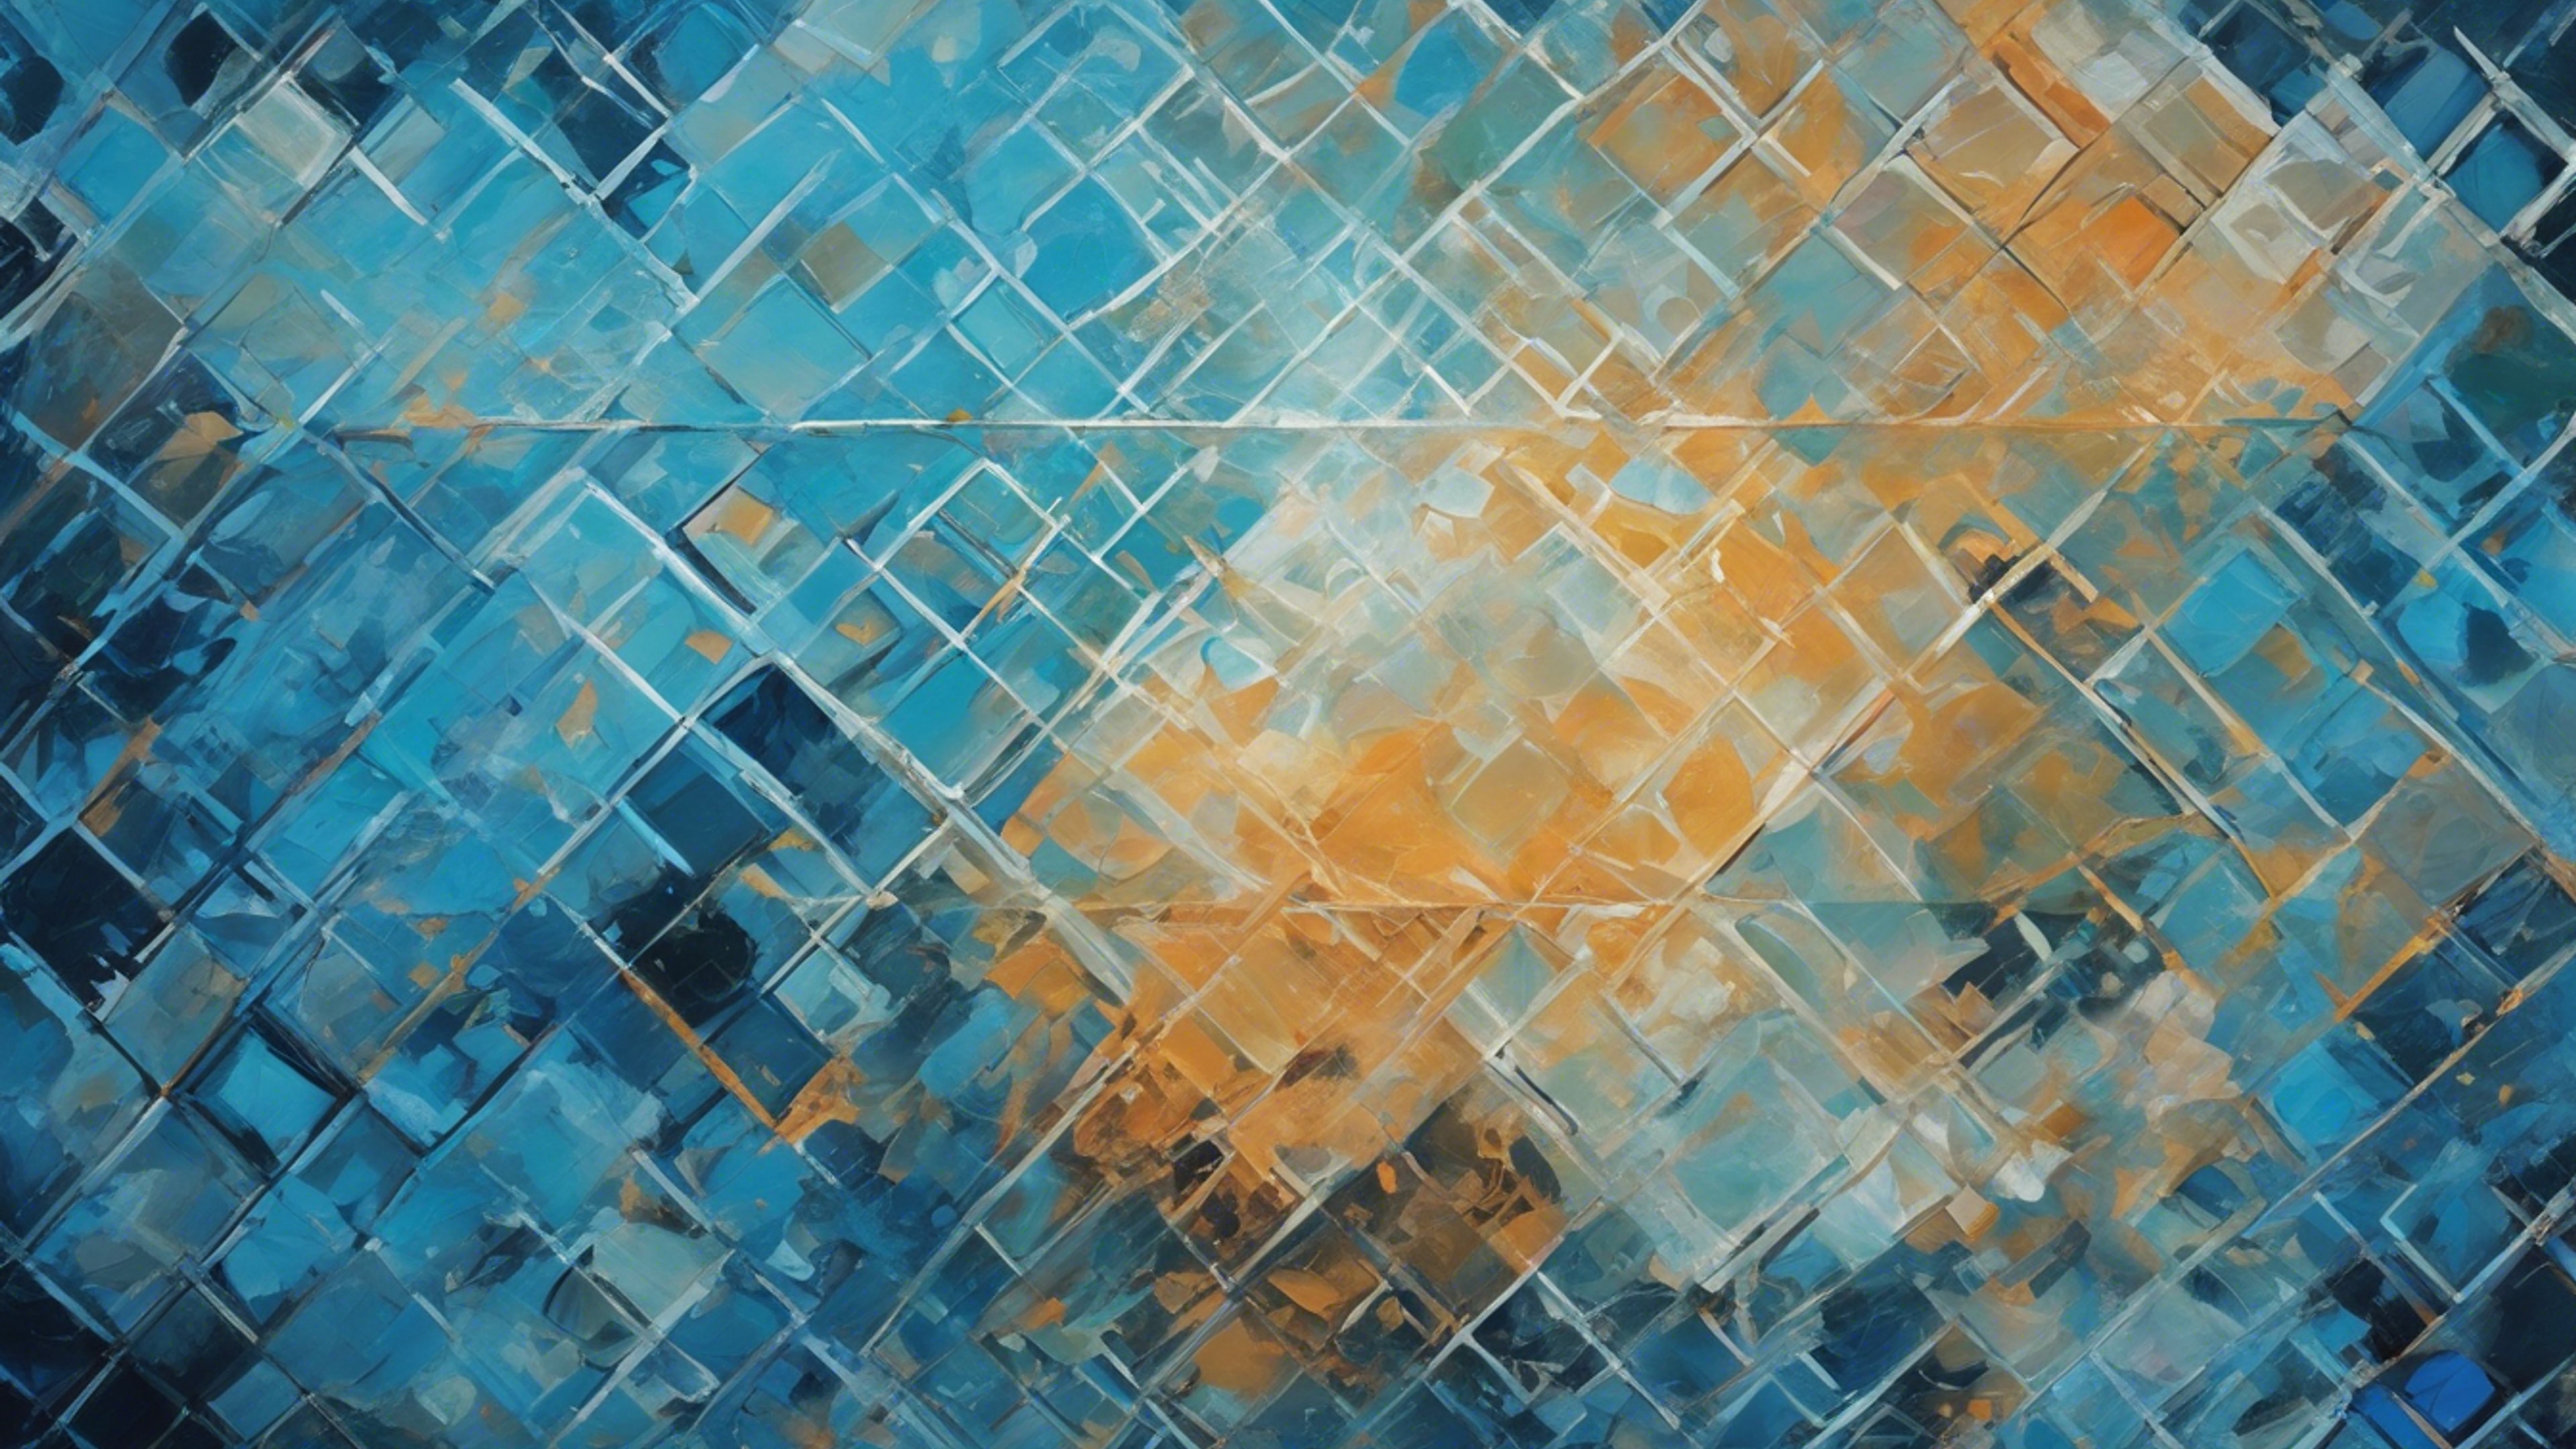 A cool blue geometric abstract painting 벽지[ac7eea7ca87f45839e46]